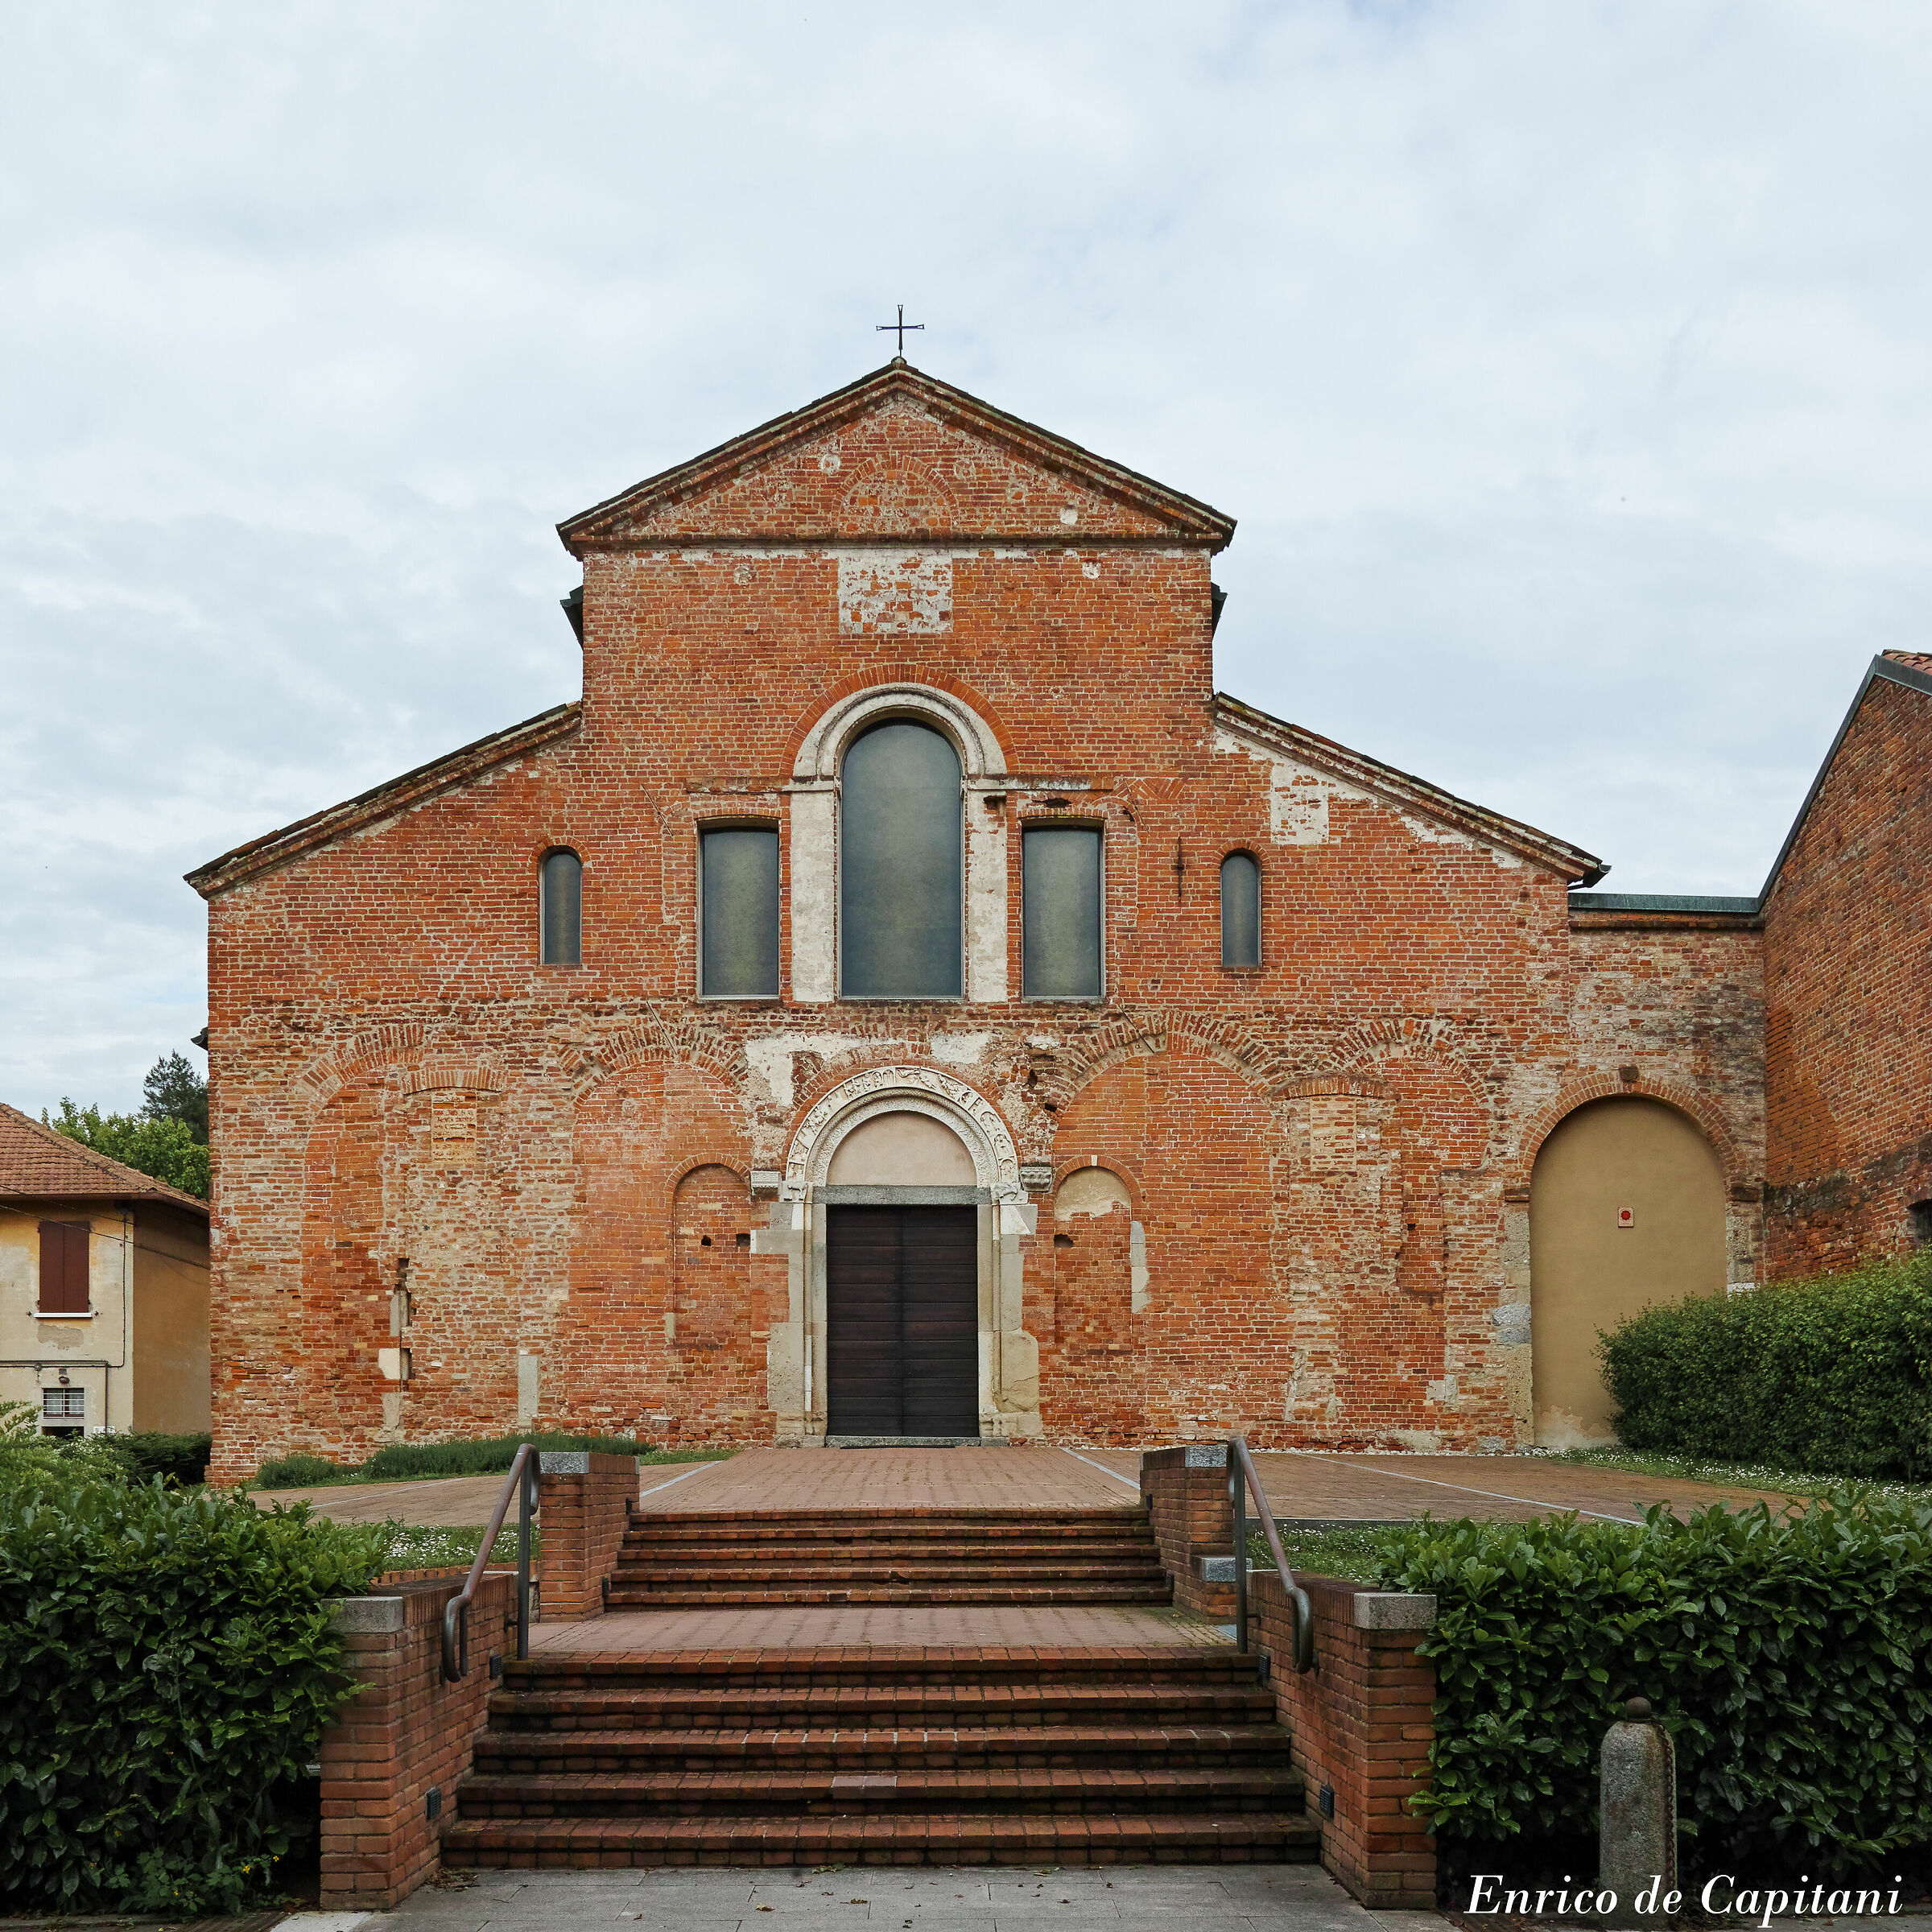 Façade of S. Maria in Calvenzano...